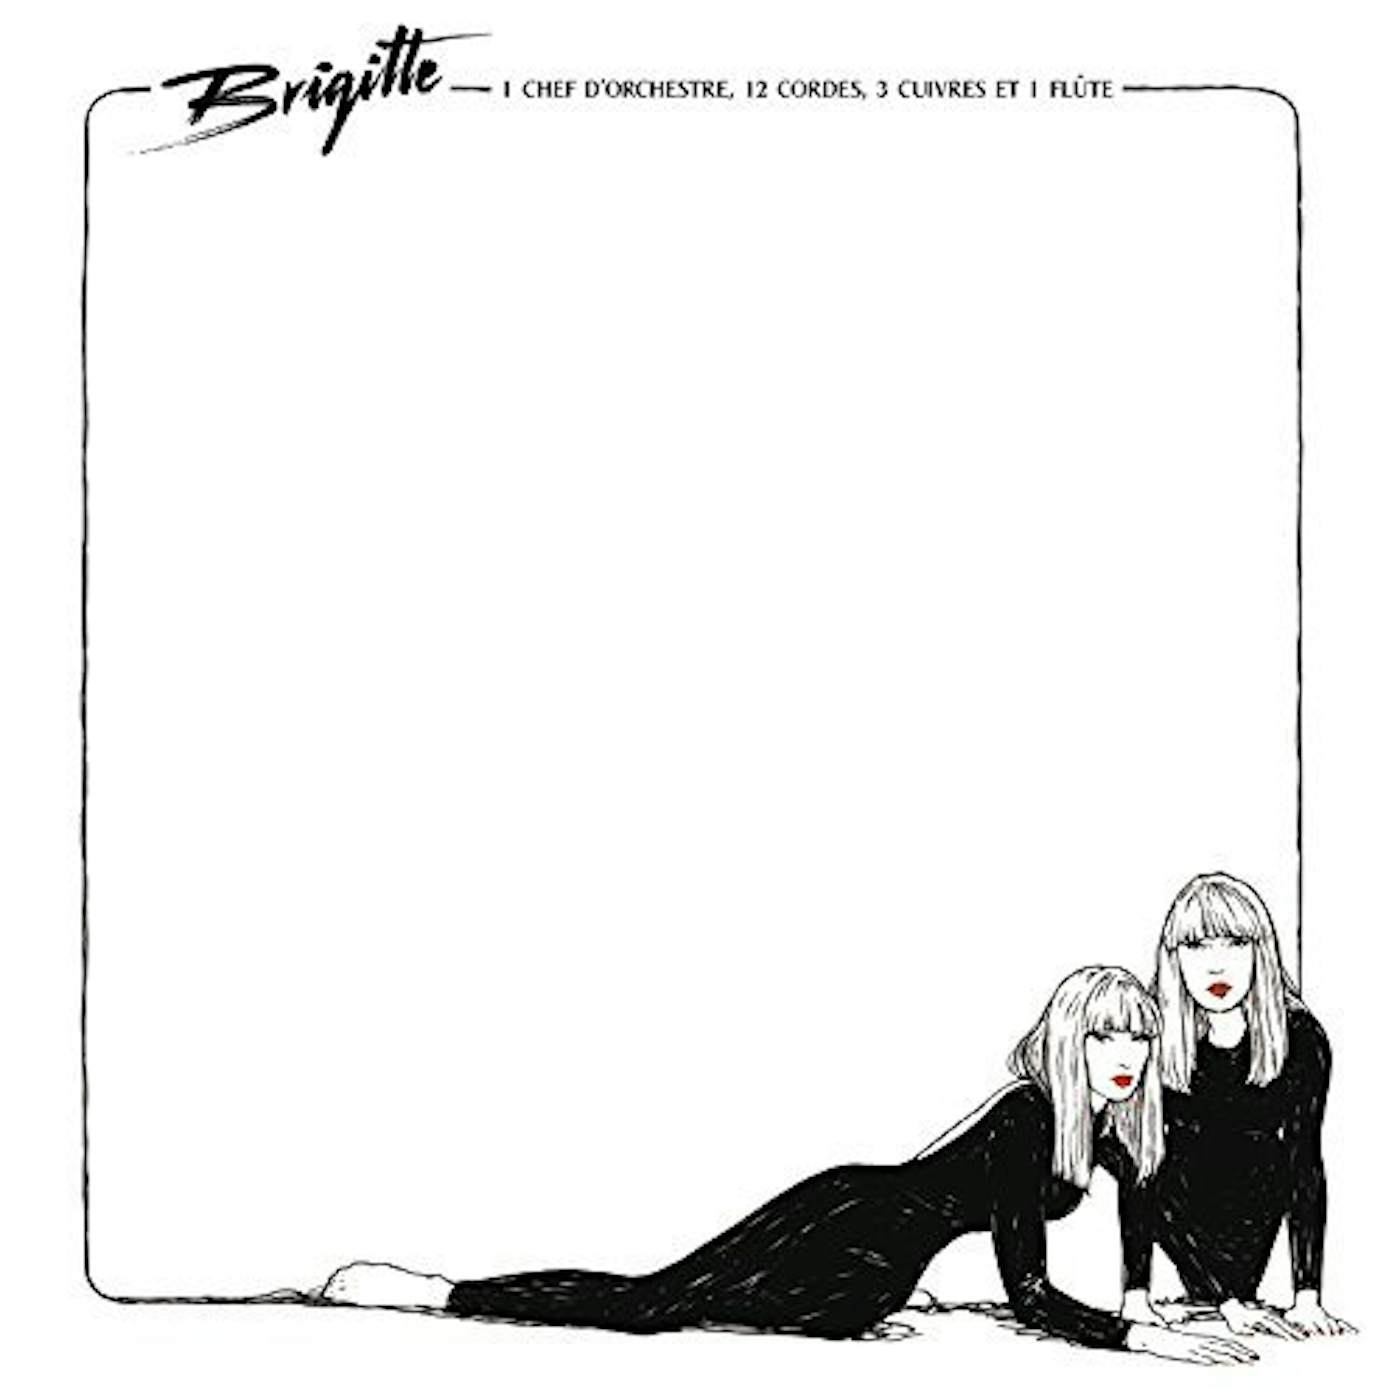 Brigitte 1 CHEF DORCHESTRE/12 CORDES/3 CUIVRES (GER) Vinyl Record